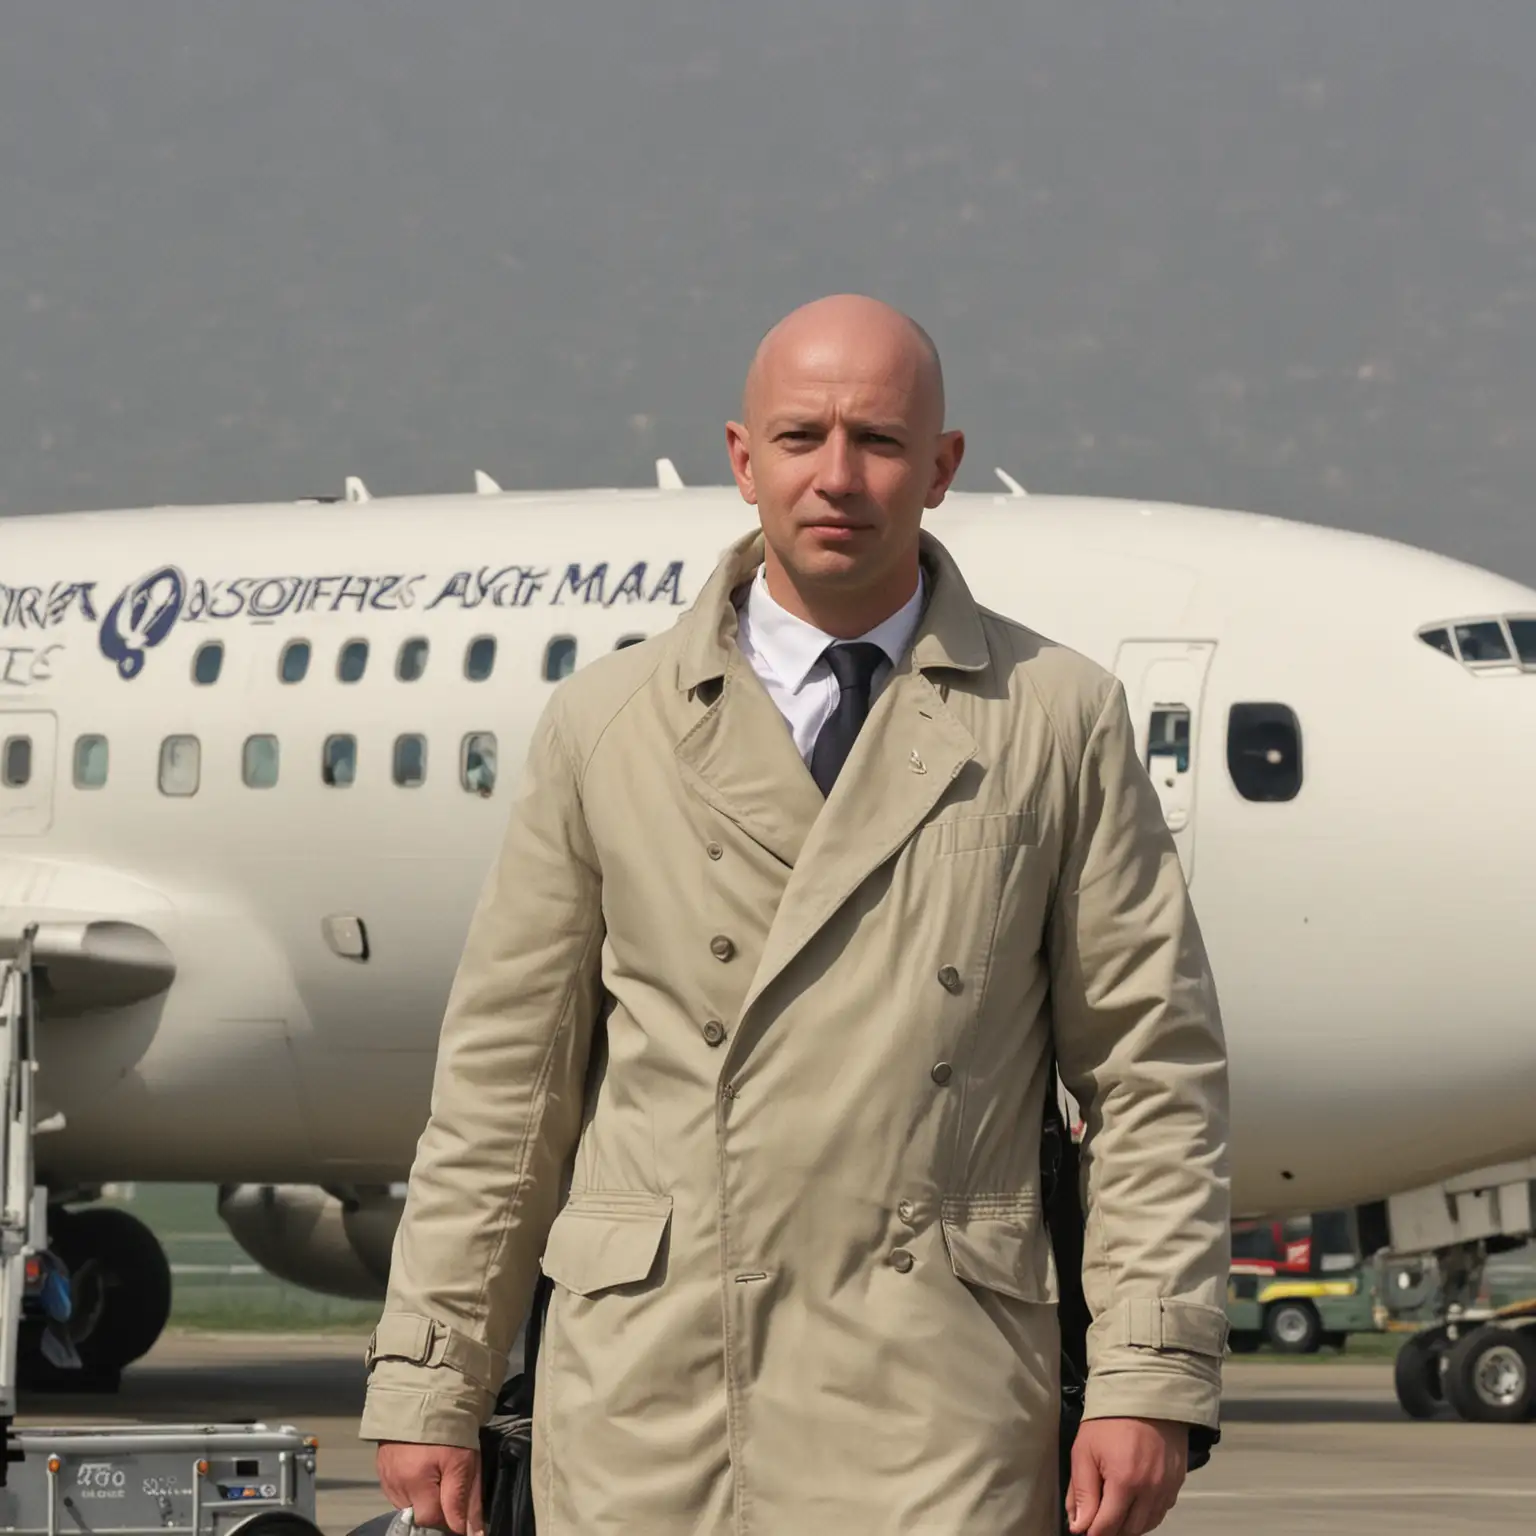 Bald White Man Arriving in Sofia Bulgaria